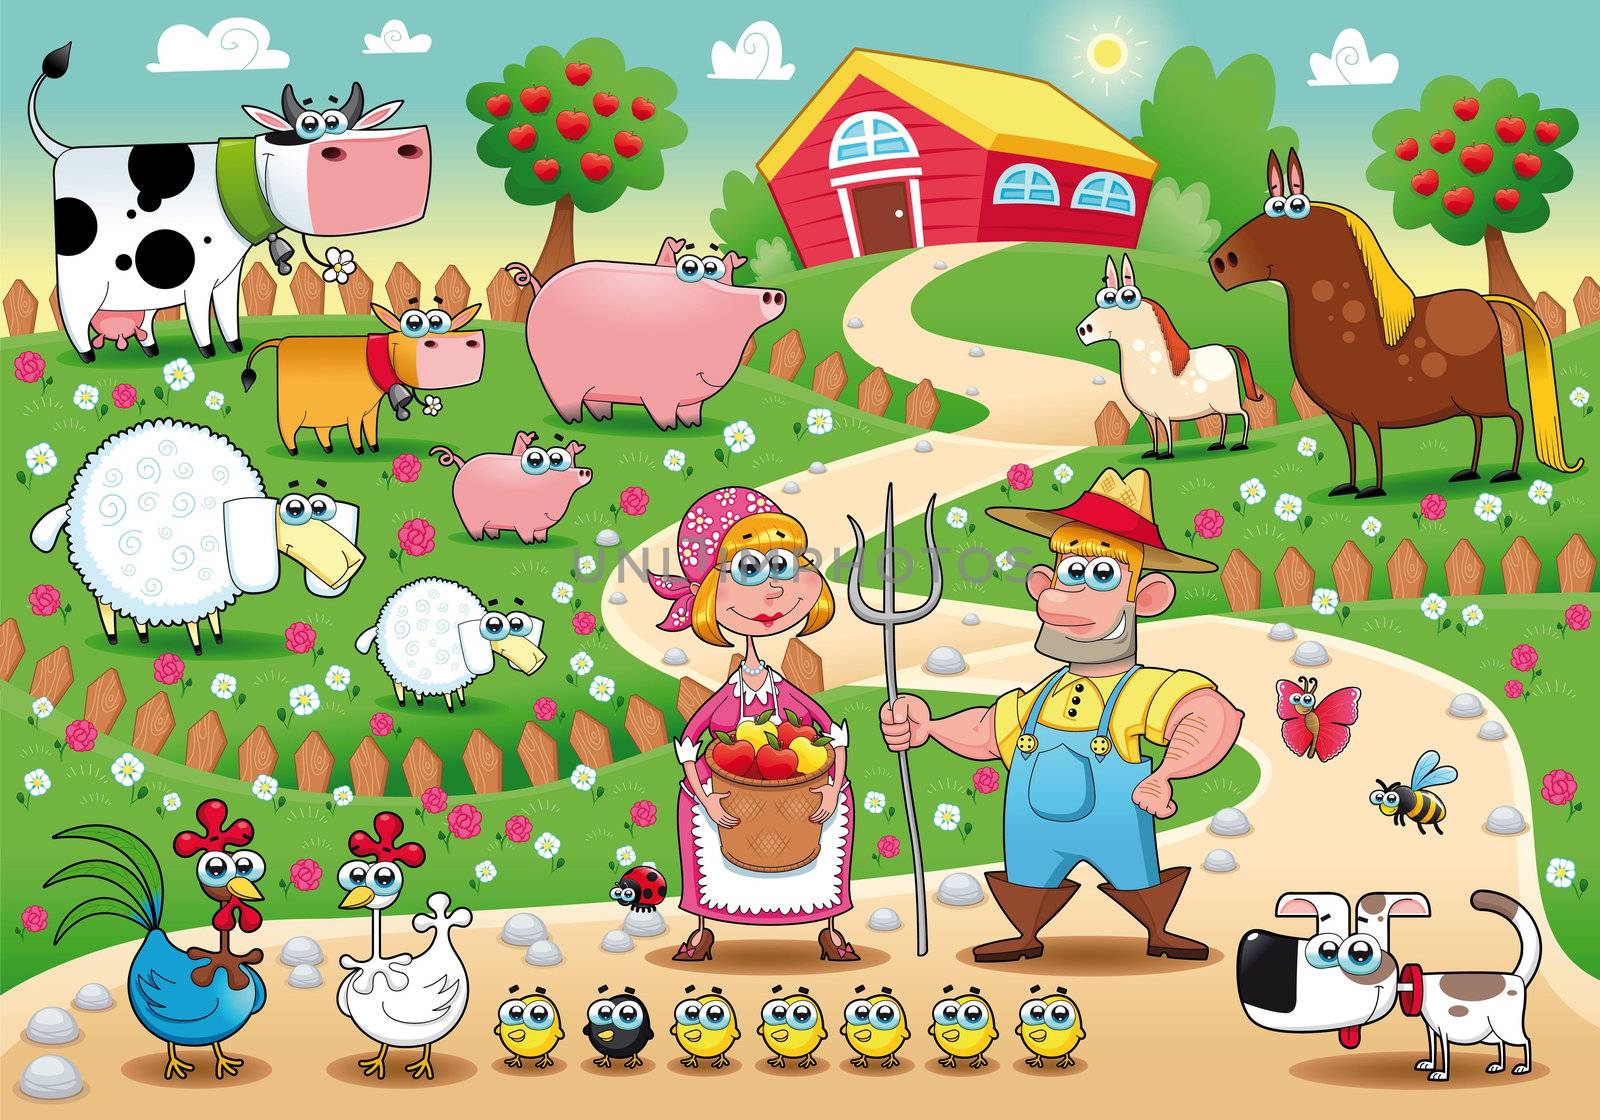 Funny farm family. Cartoon and vector illustration

